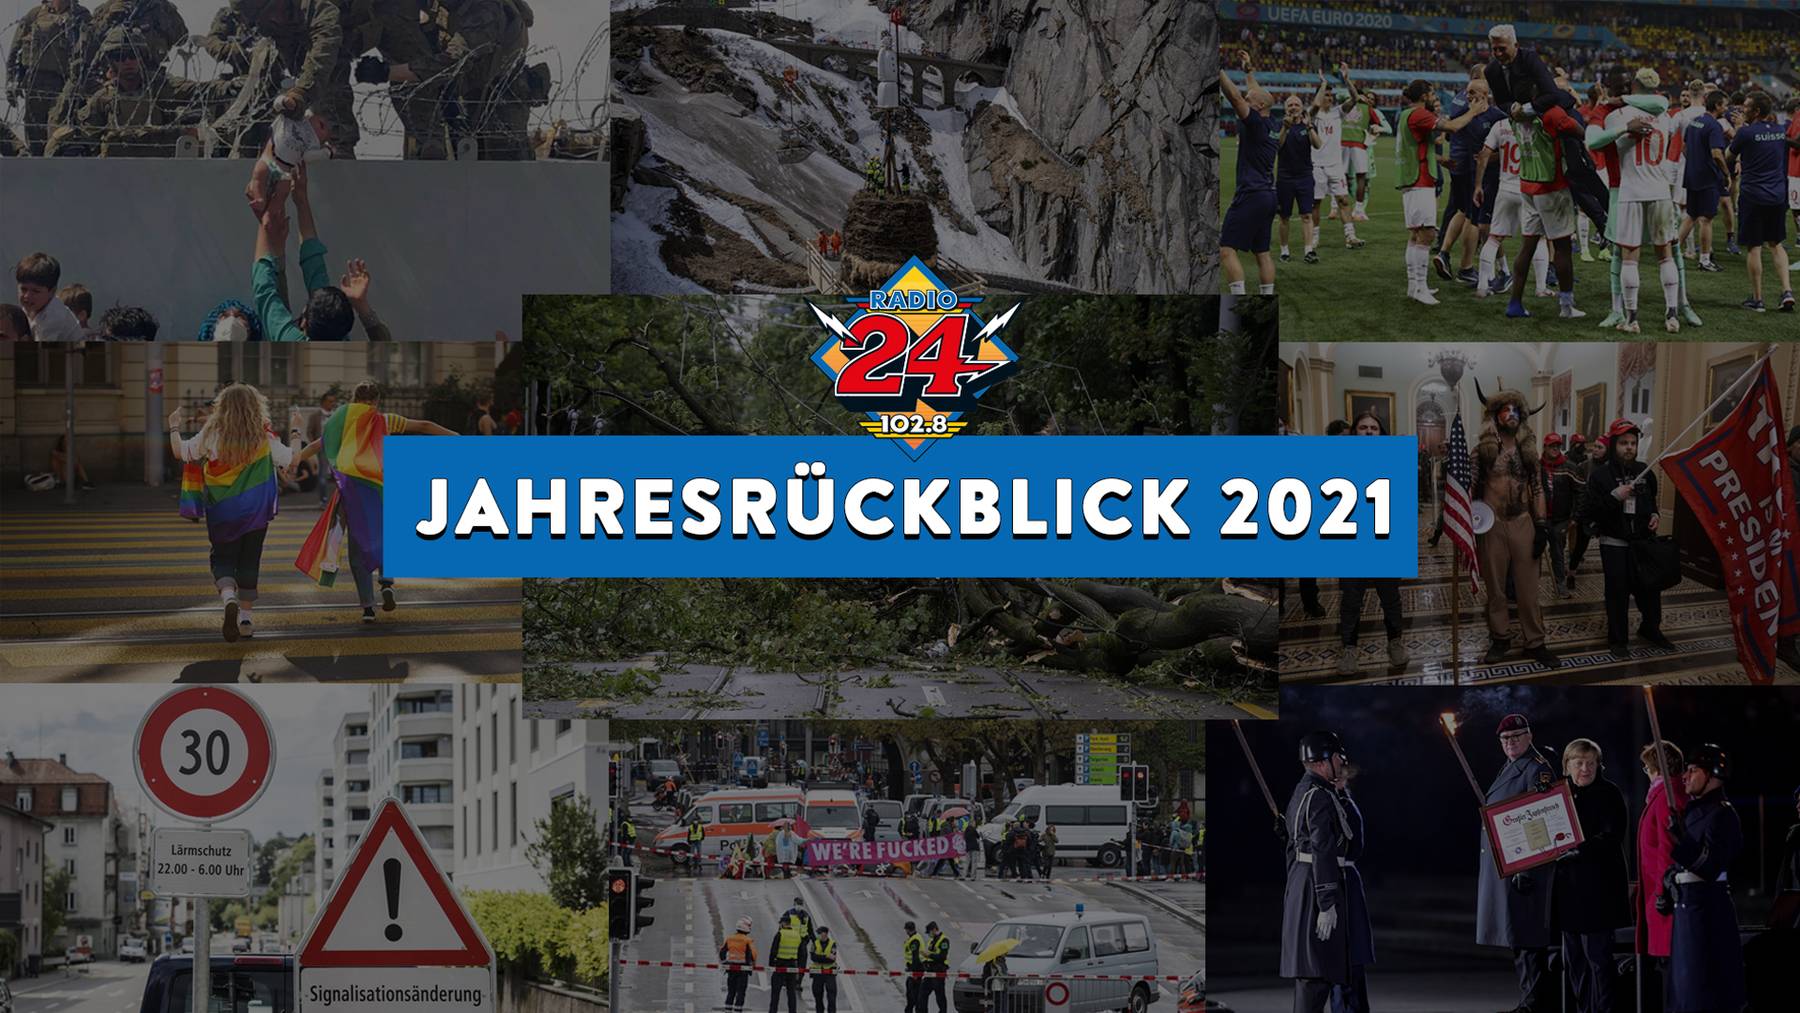 Jahresrückblick Zürich 2021 Text